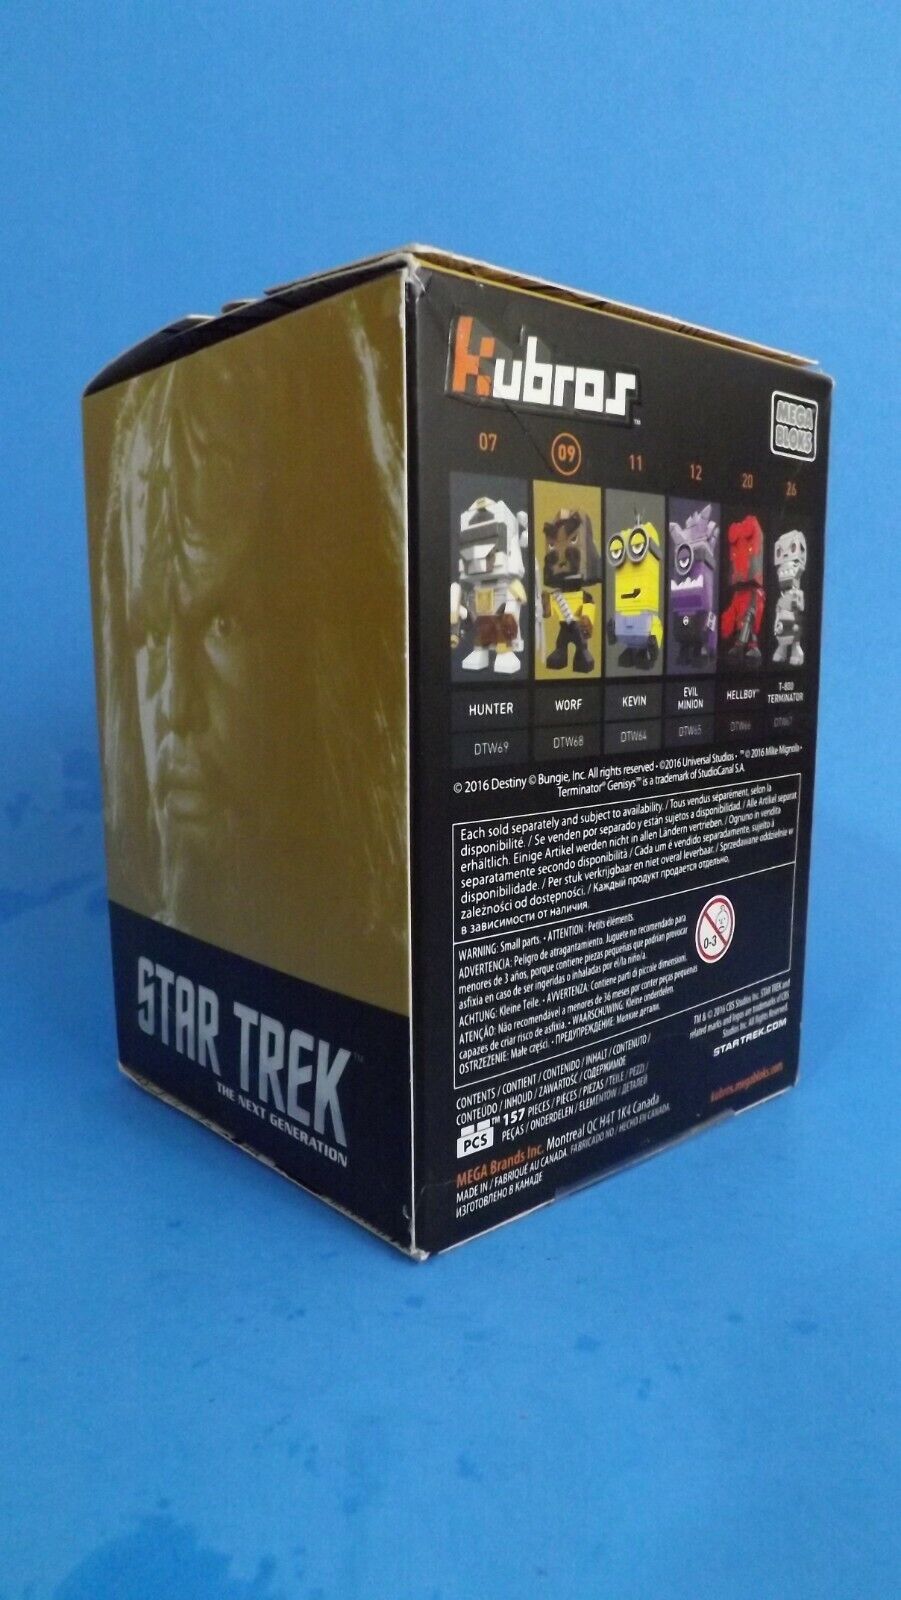 Mega Bloks Kubros Star Trek The Next Generation #09 Worf New in Box@